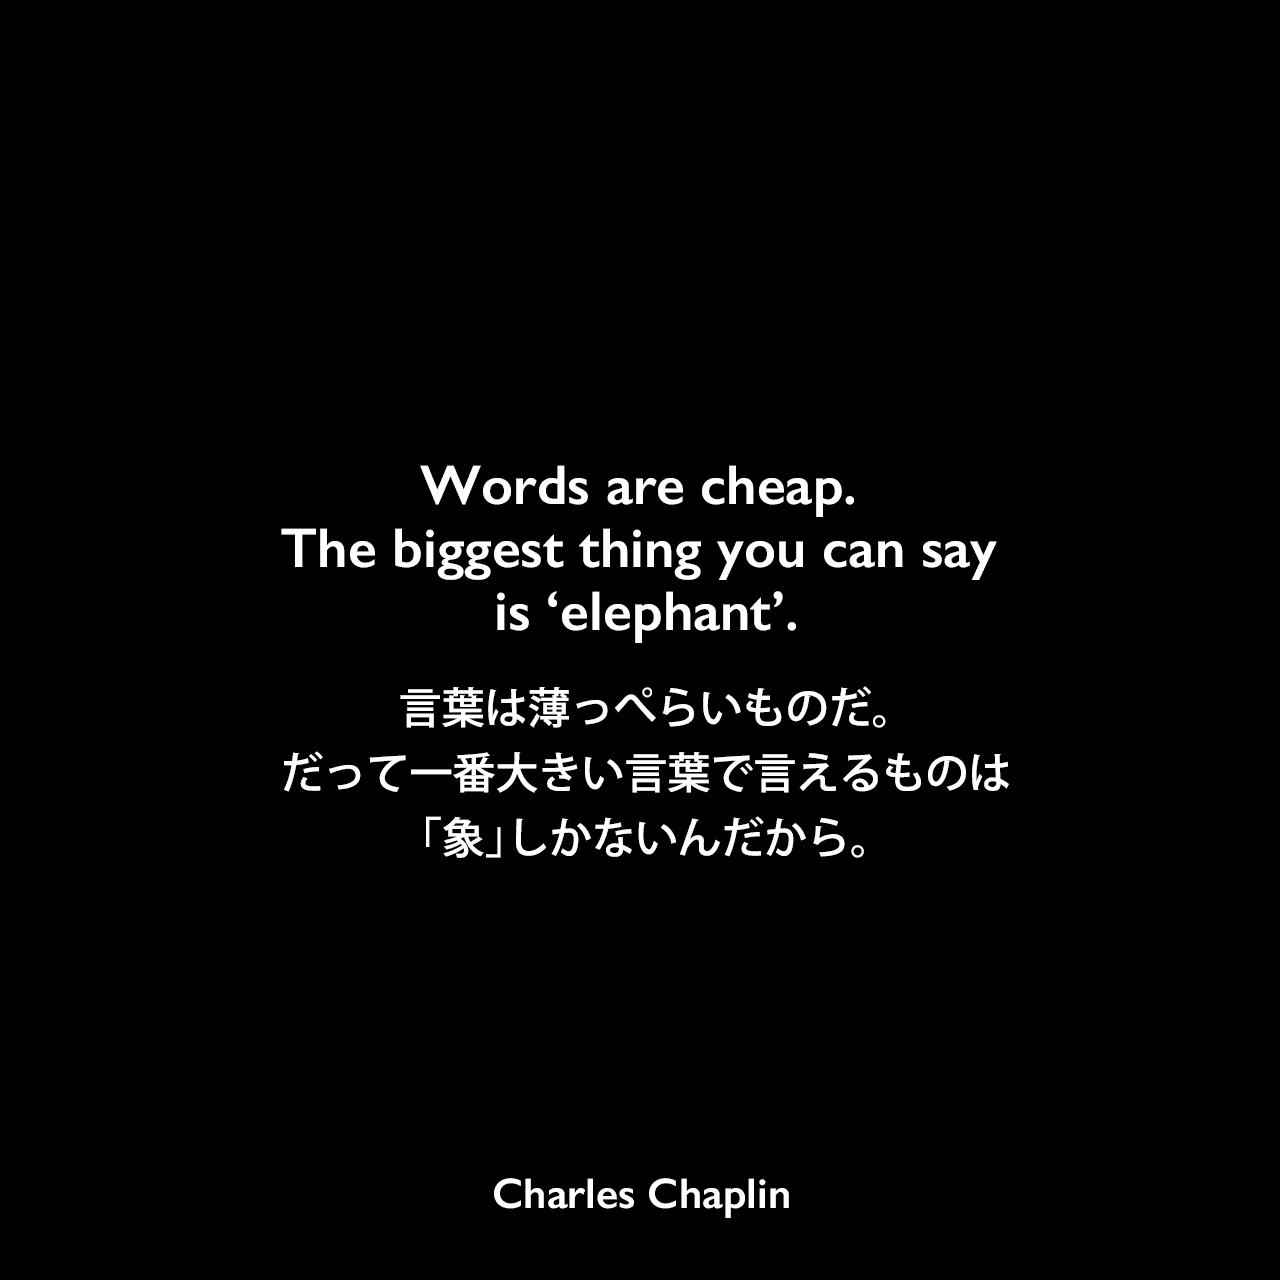 Words are cheap. The biggest thing you can say is ‘elephant’.言葉は薄っぺらいものだ。だって一番大きい言葉で言えるものは「象」しかないんだから。Charles Chaplin